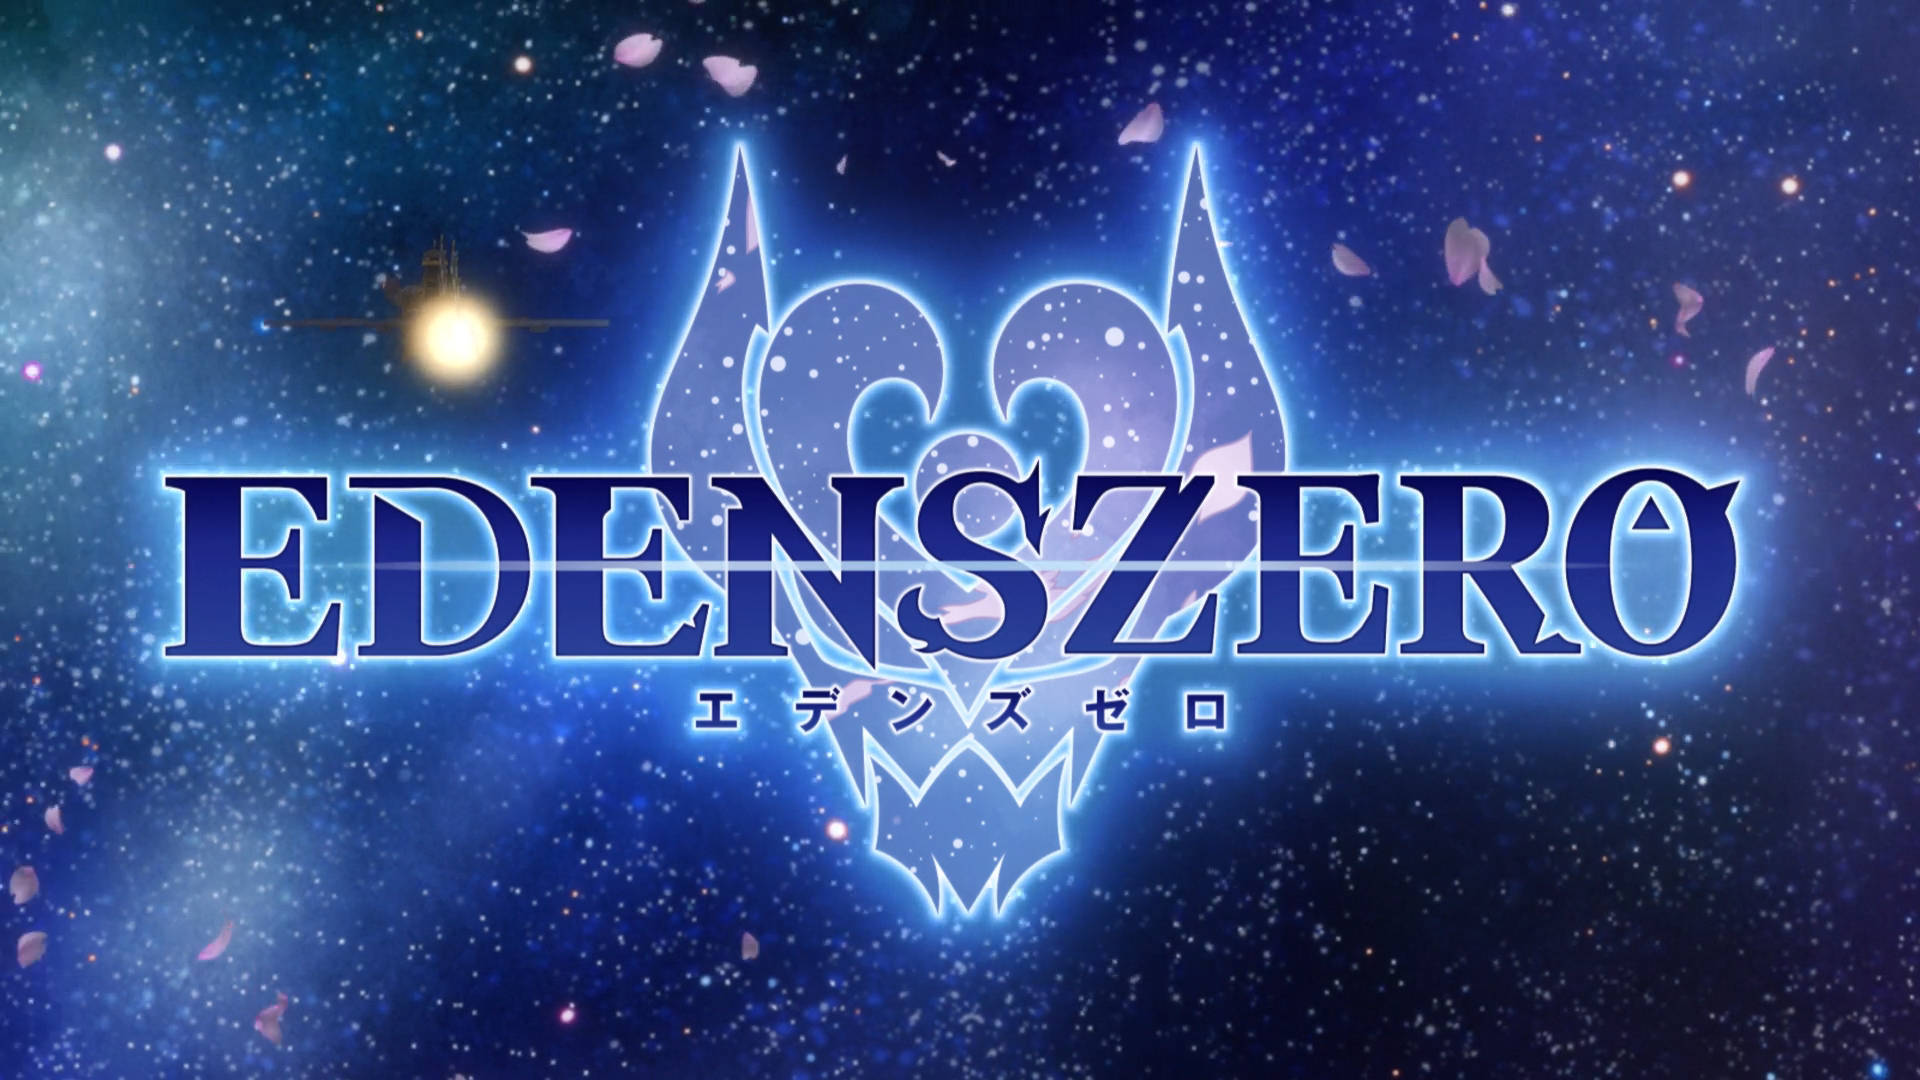 2021 Edens Zero Anime Background